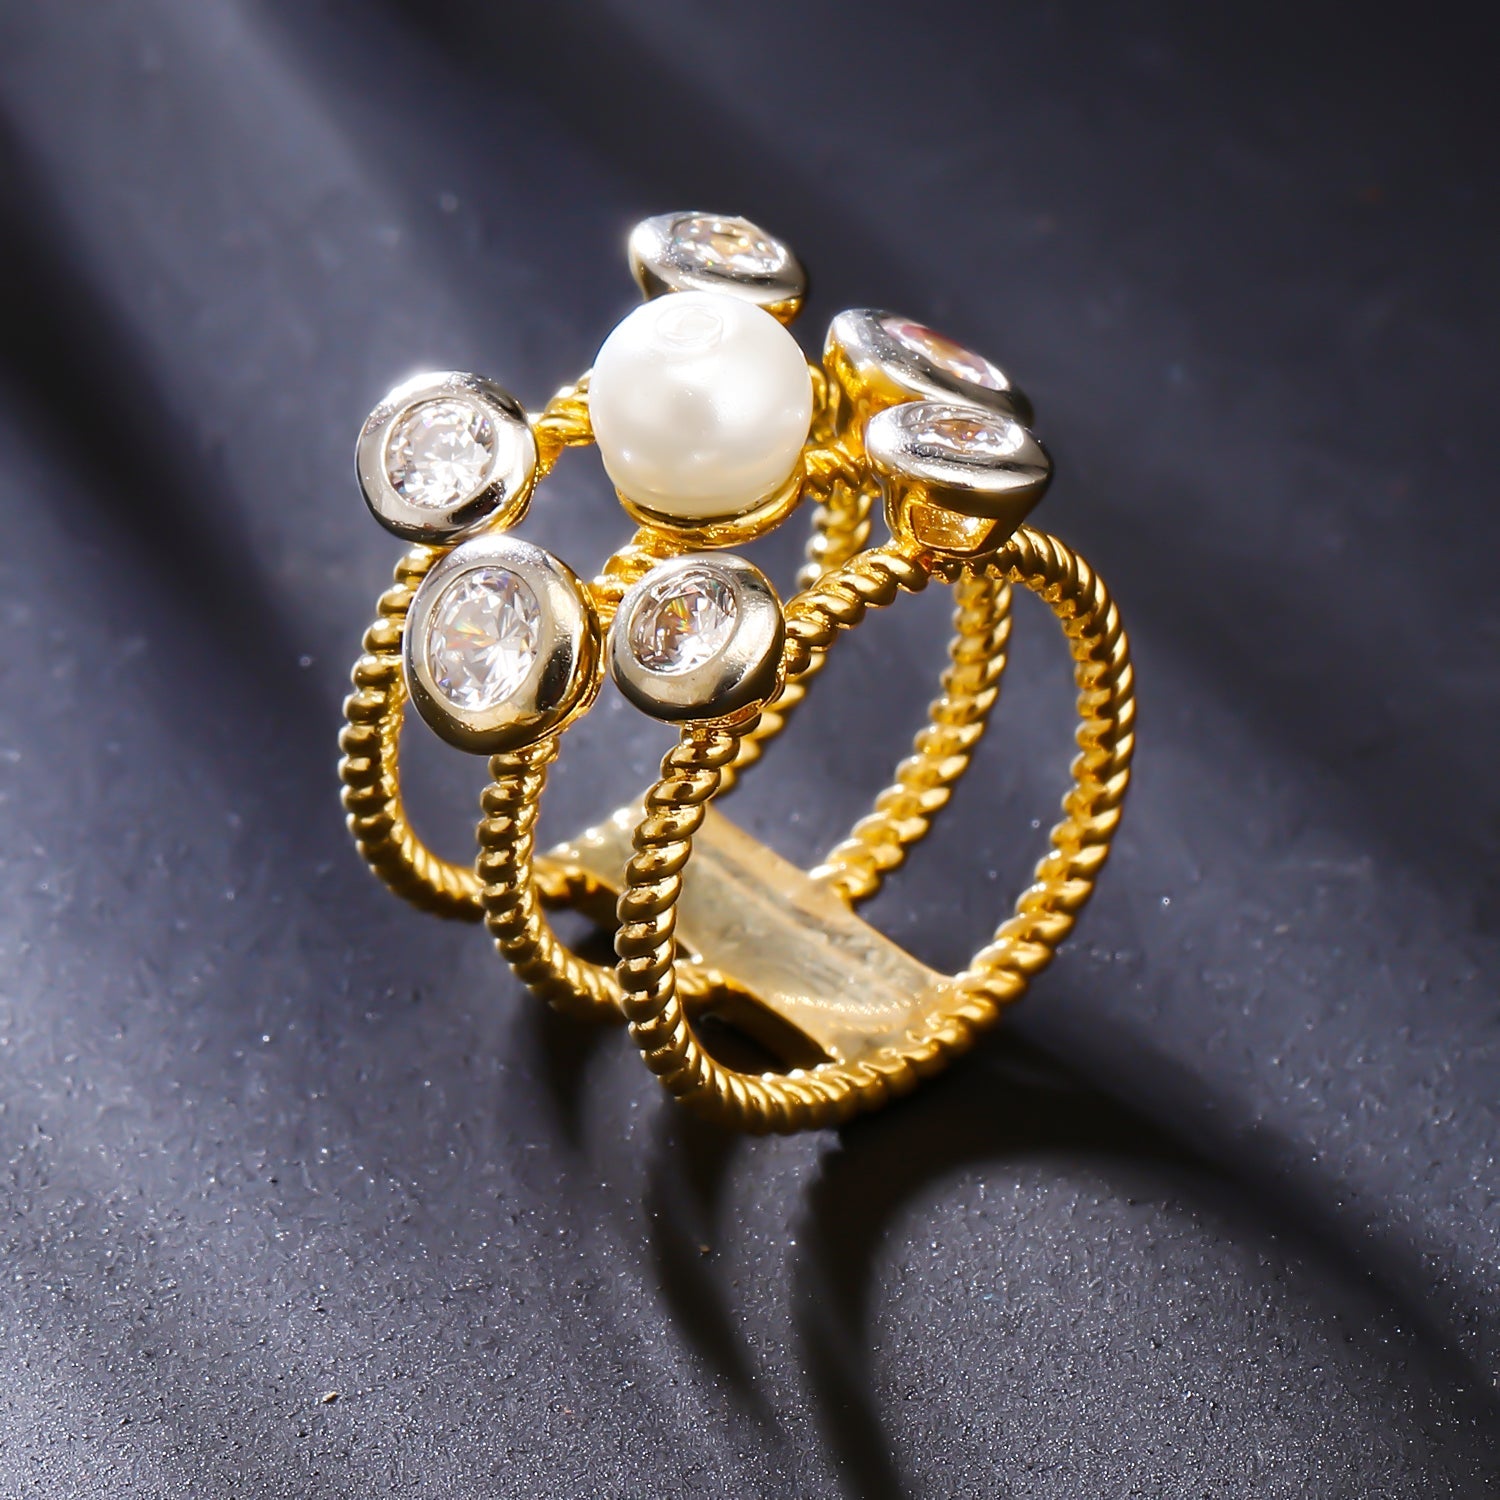 Buy Rose Gold-Toned Rings for Women by Ferosh Online | Ajio.com